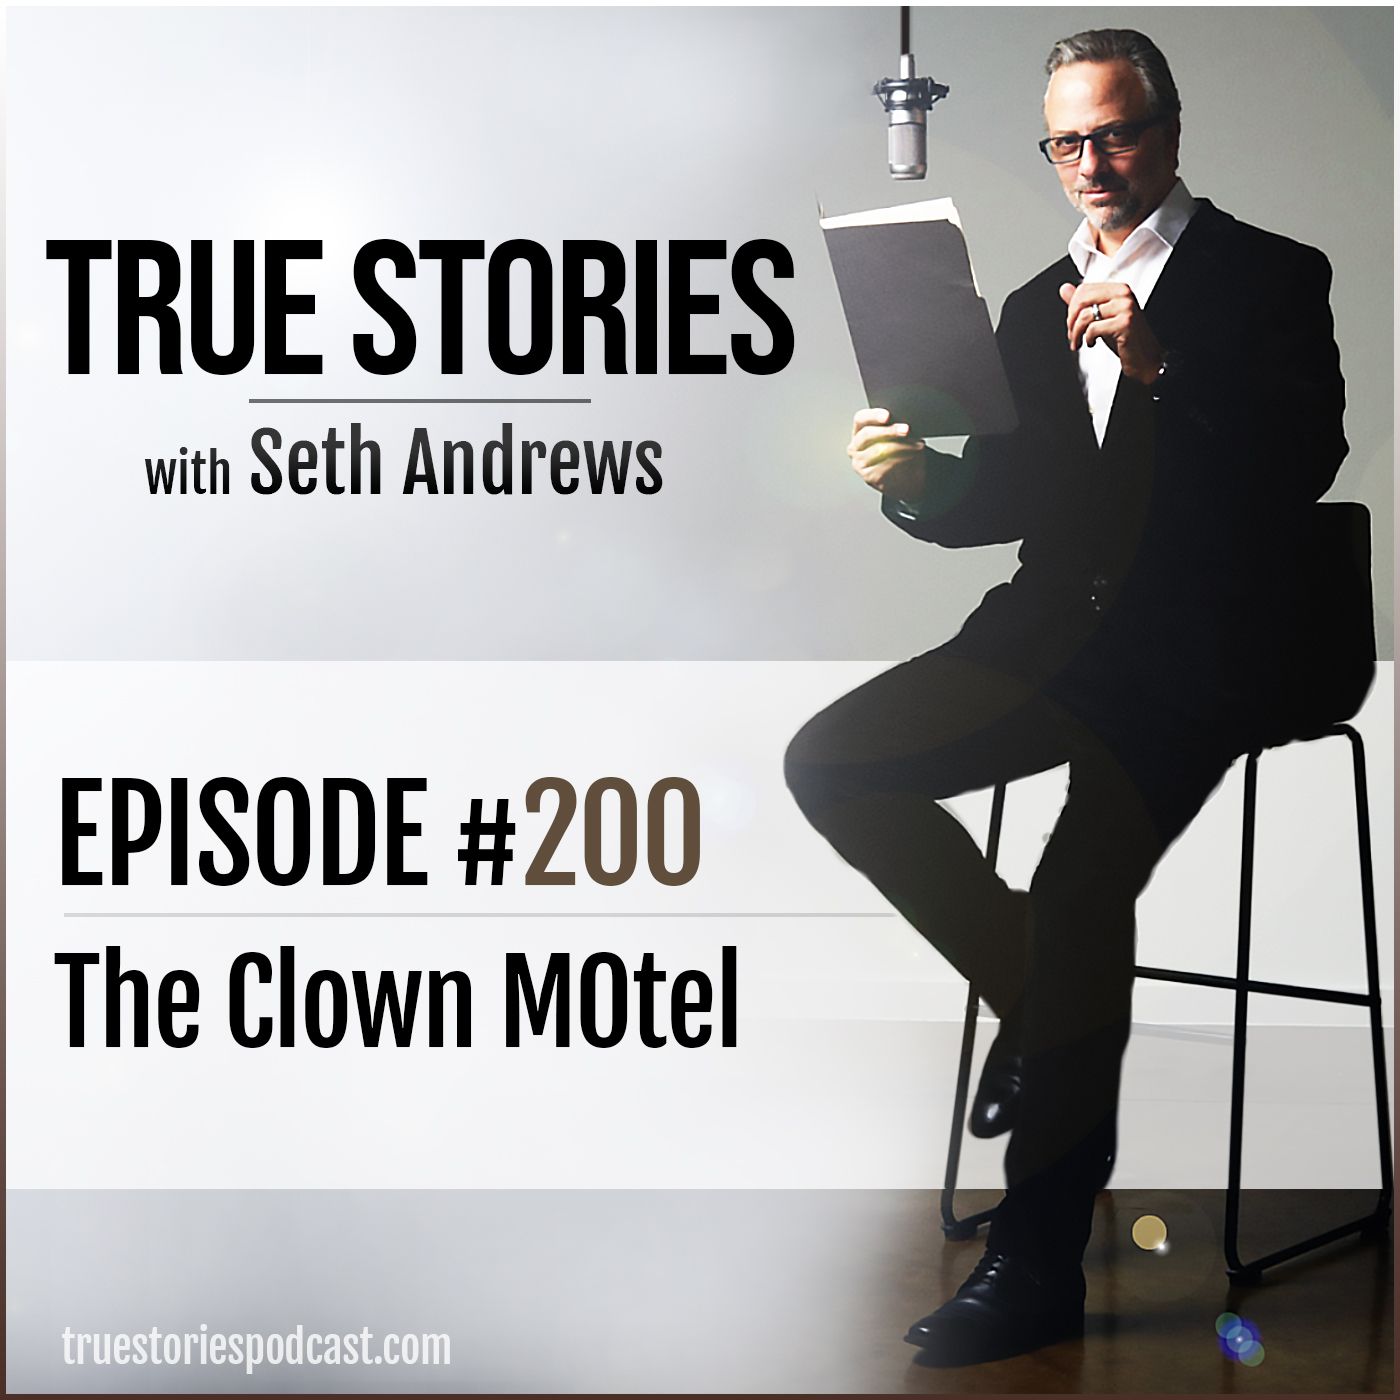 True Stories #200 - The Clown Motel